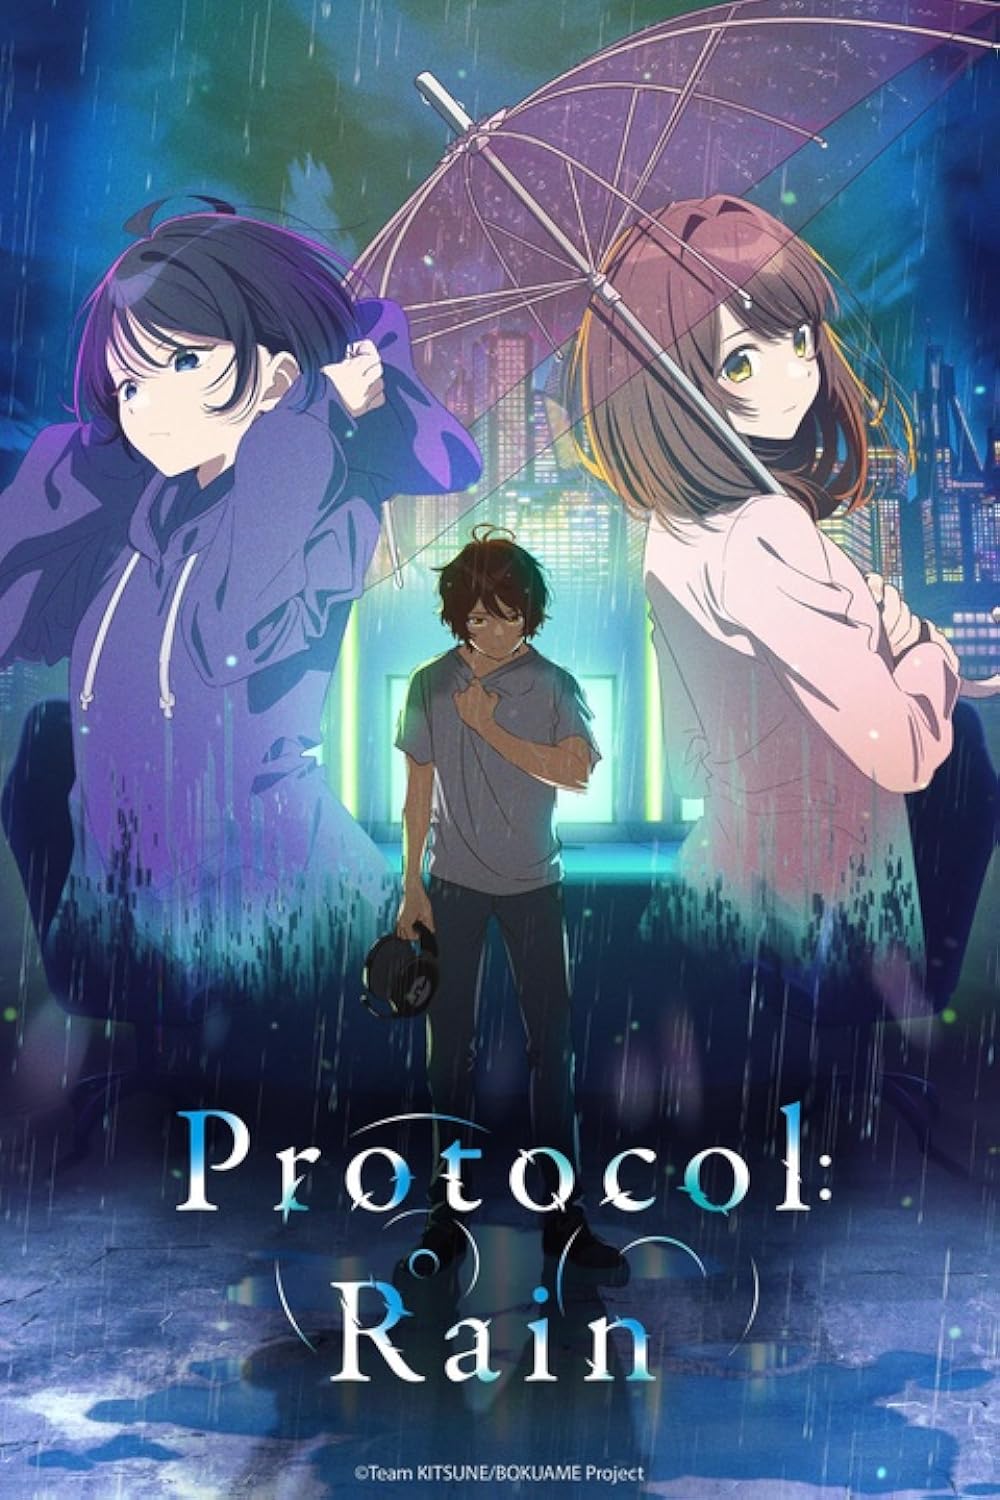 Protocol: Rain